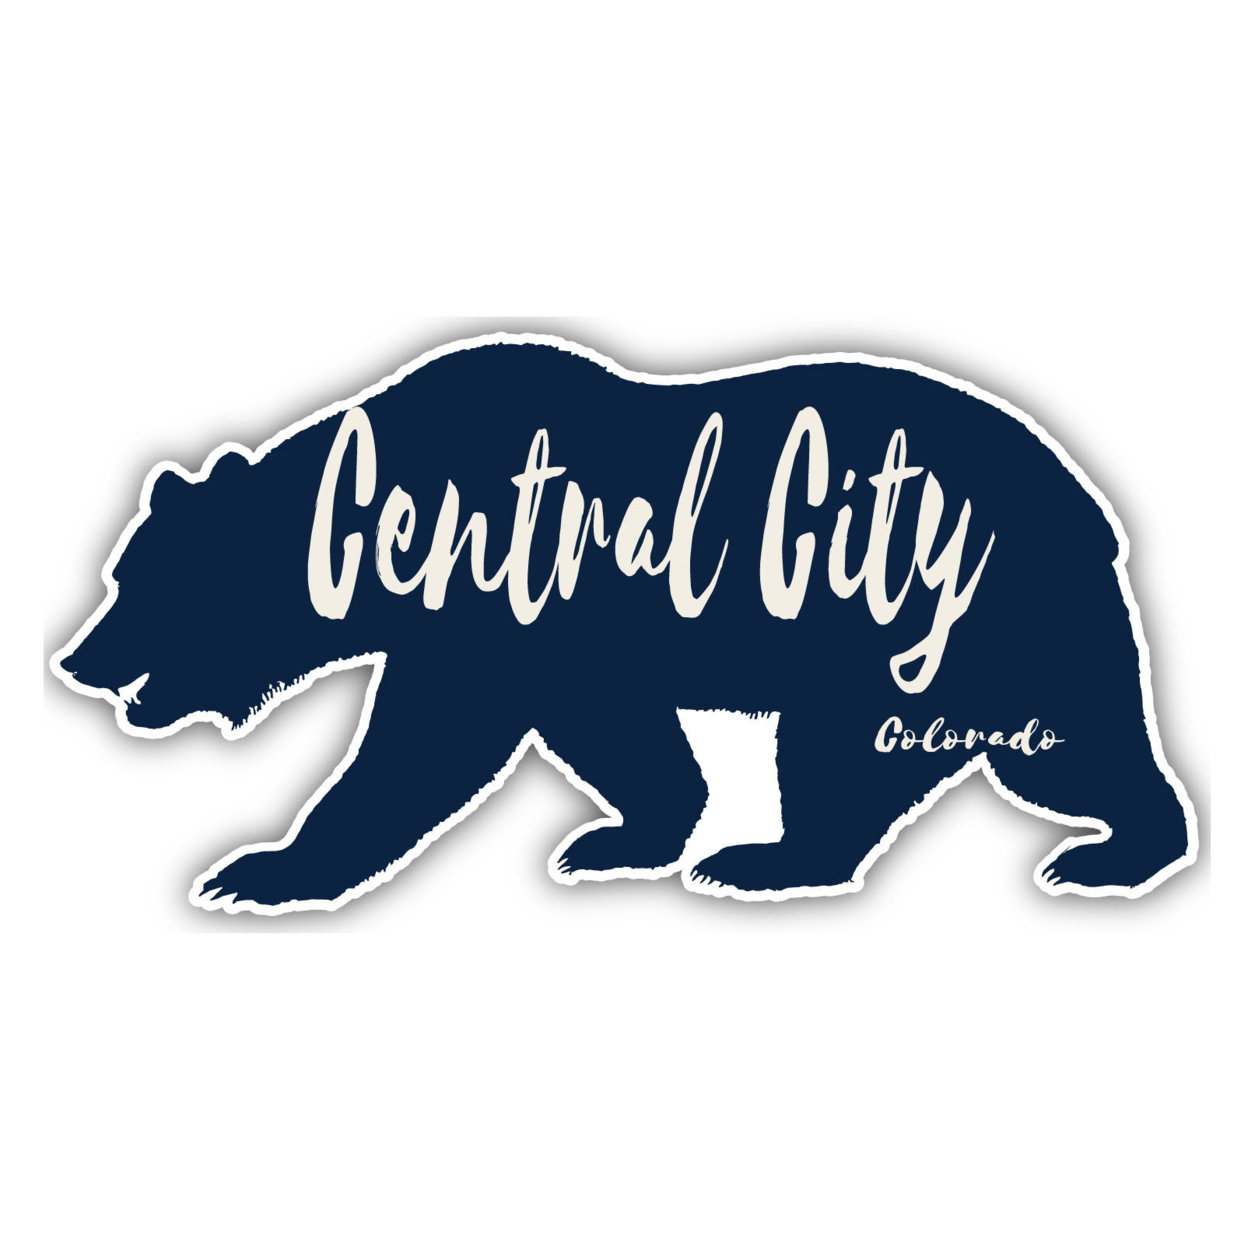 Central City Colorado Souvenir Decorative Stickers (Choose Theme And Size) - Single Unit, 4-Inch, Tent